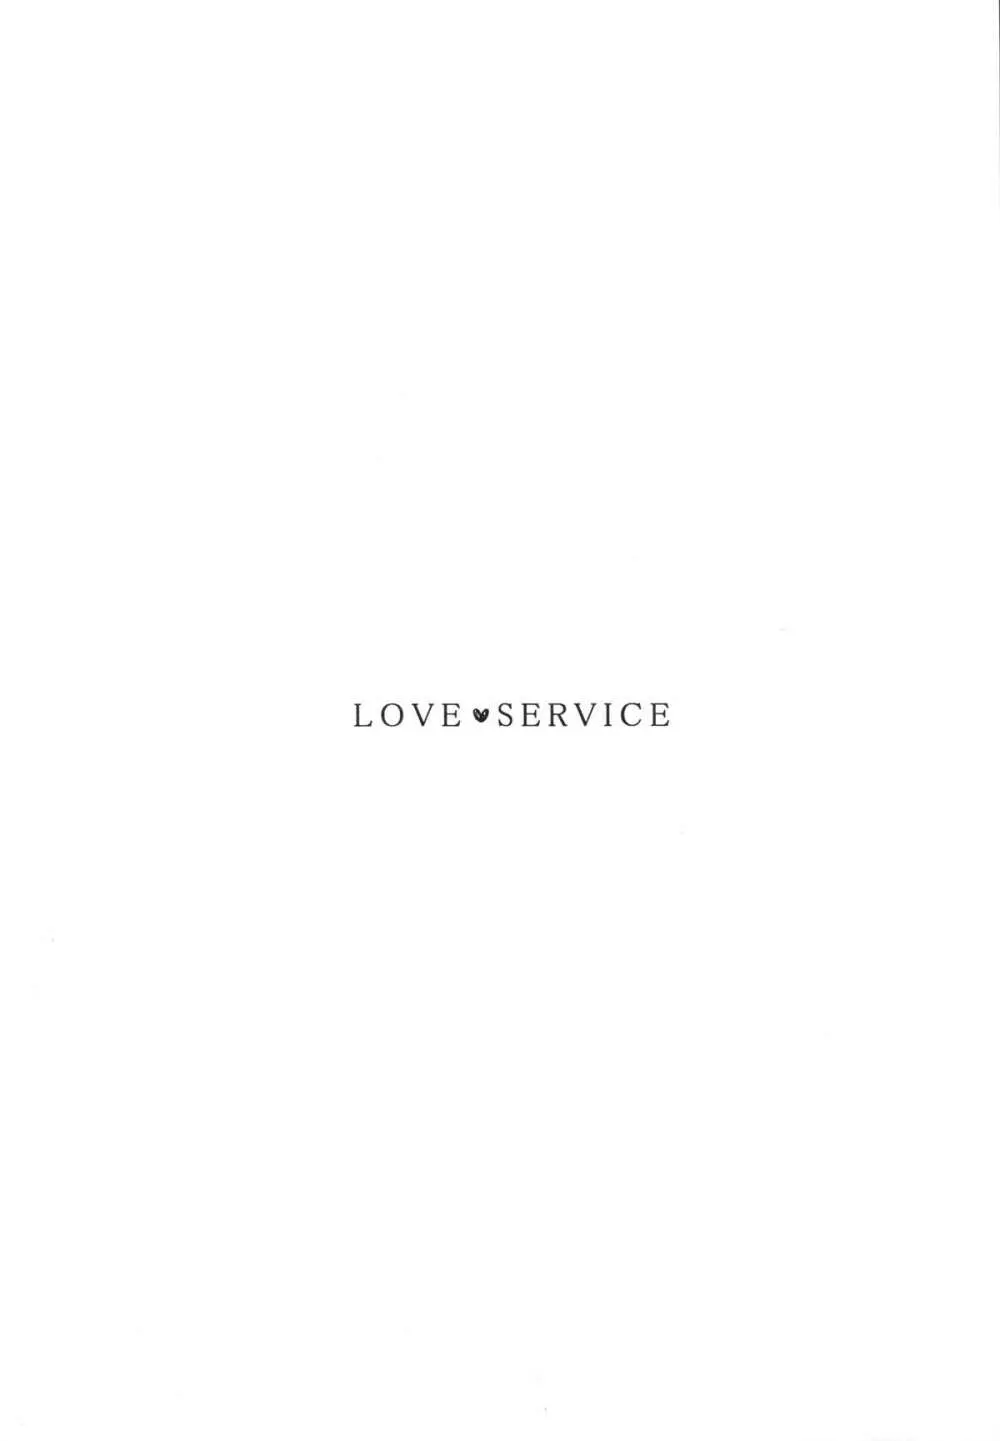 Love service - page3